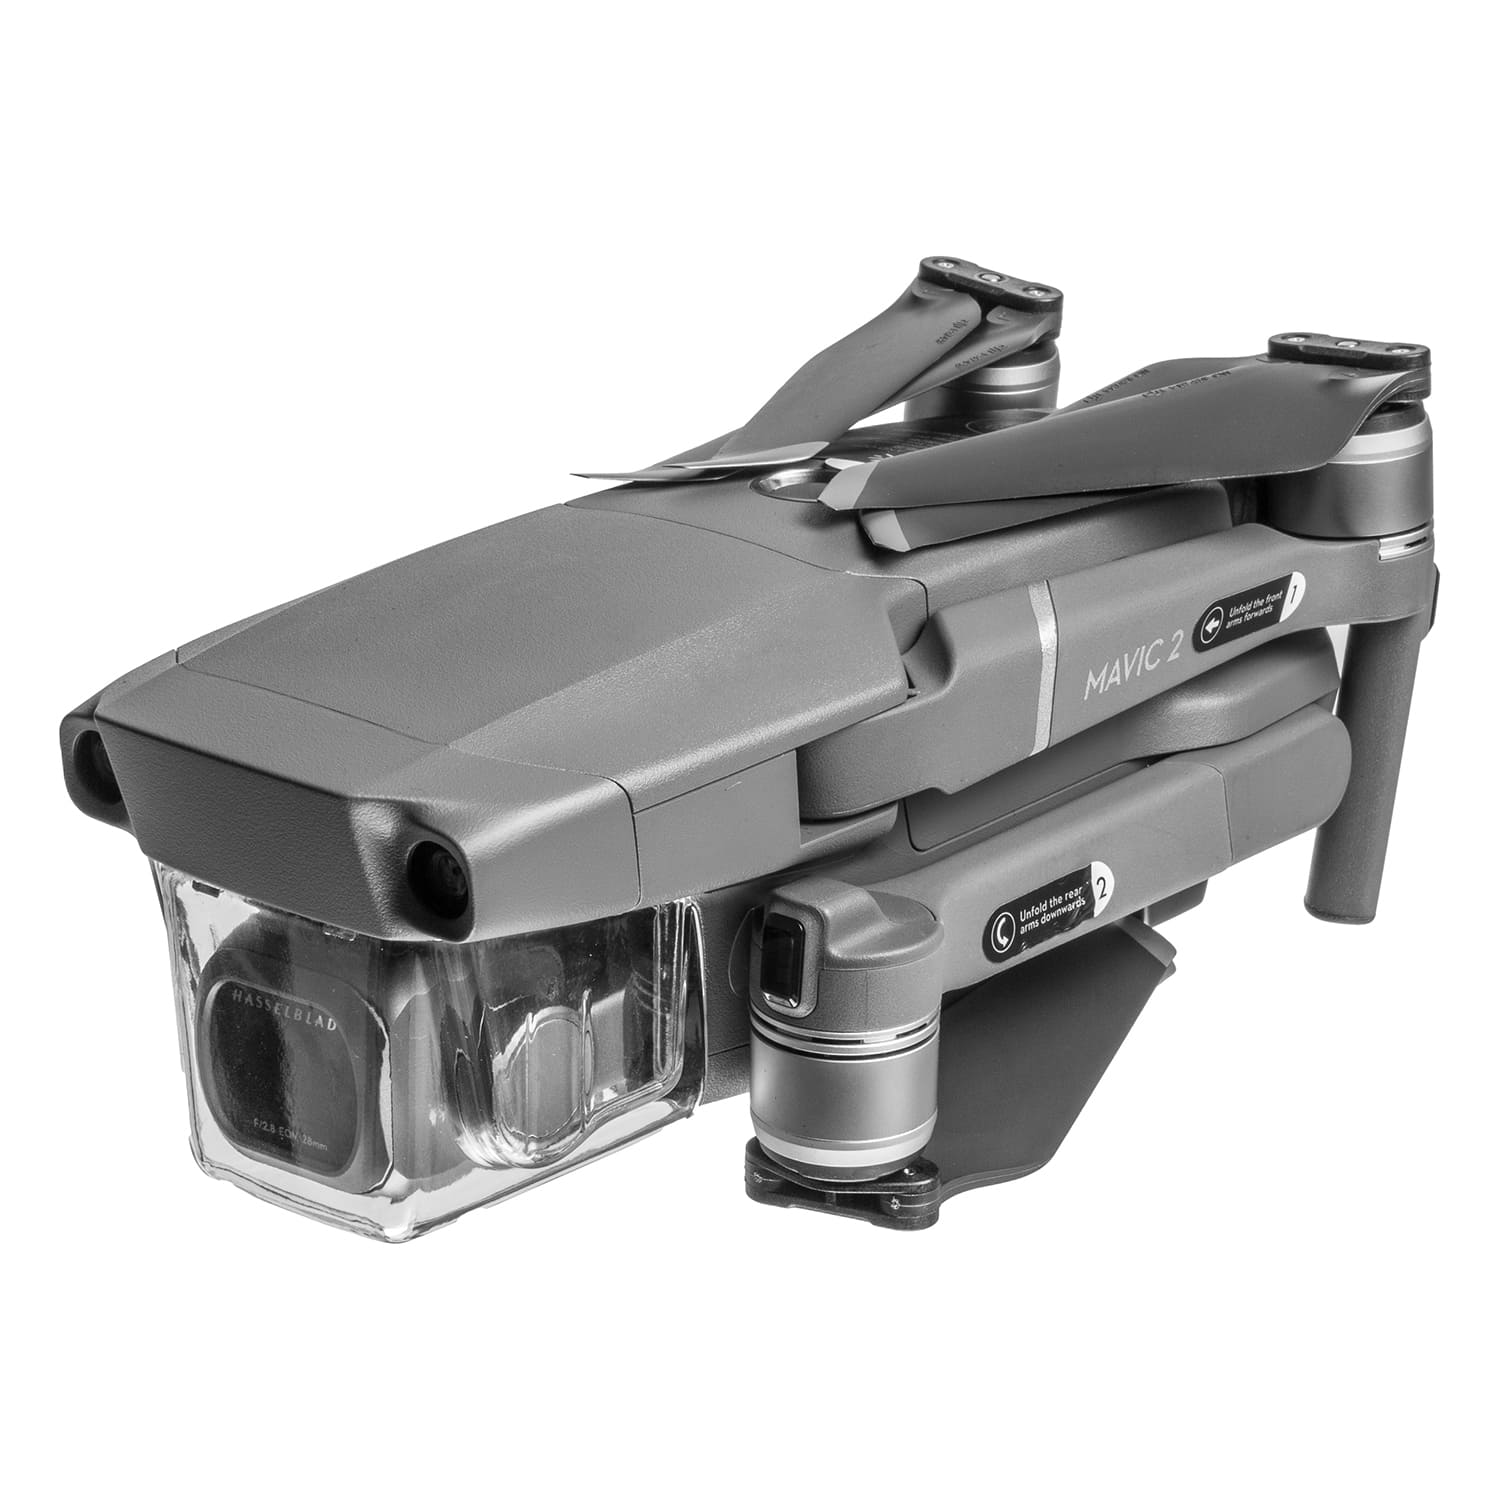 Mavic 2 Pro Lens Cap Gimbal Stabilizer - Clear